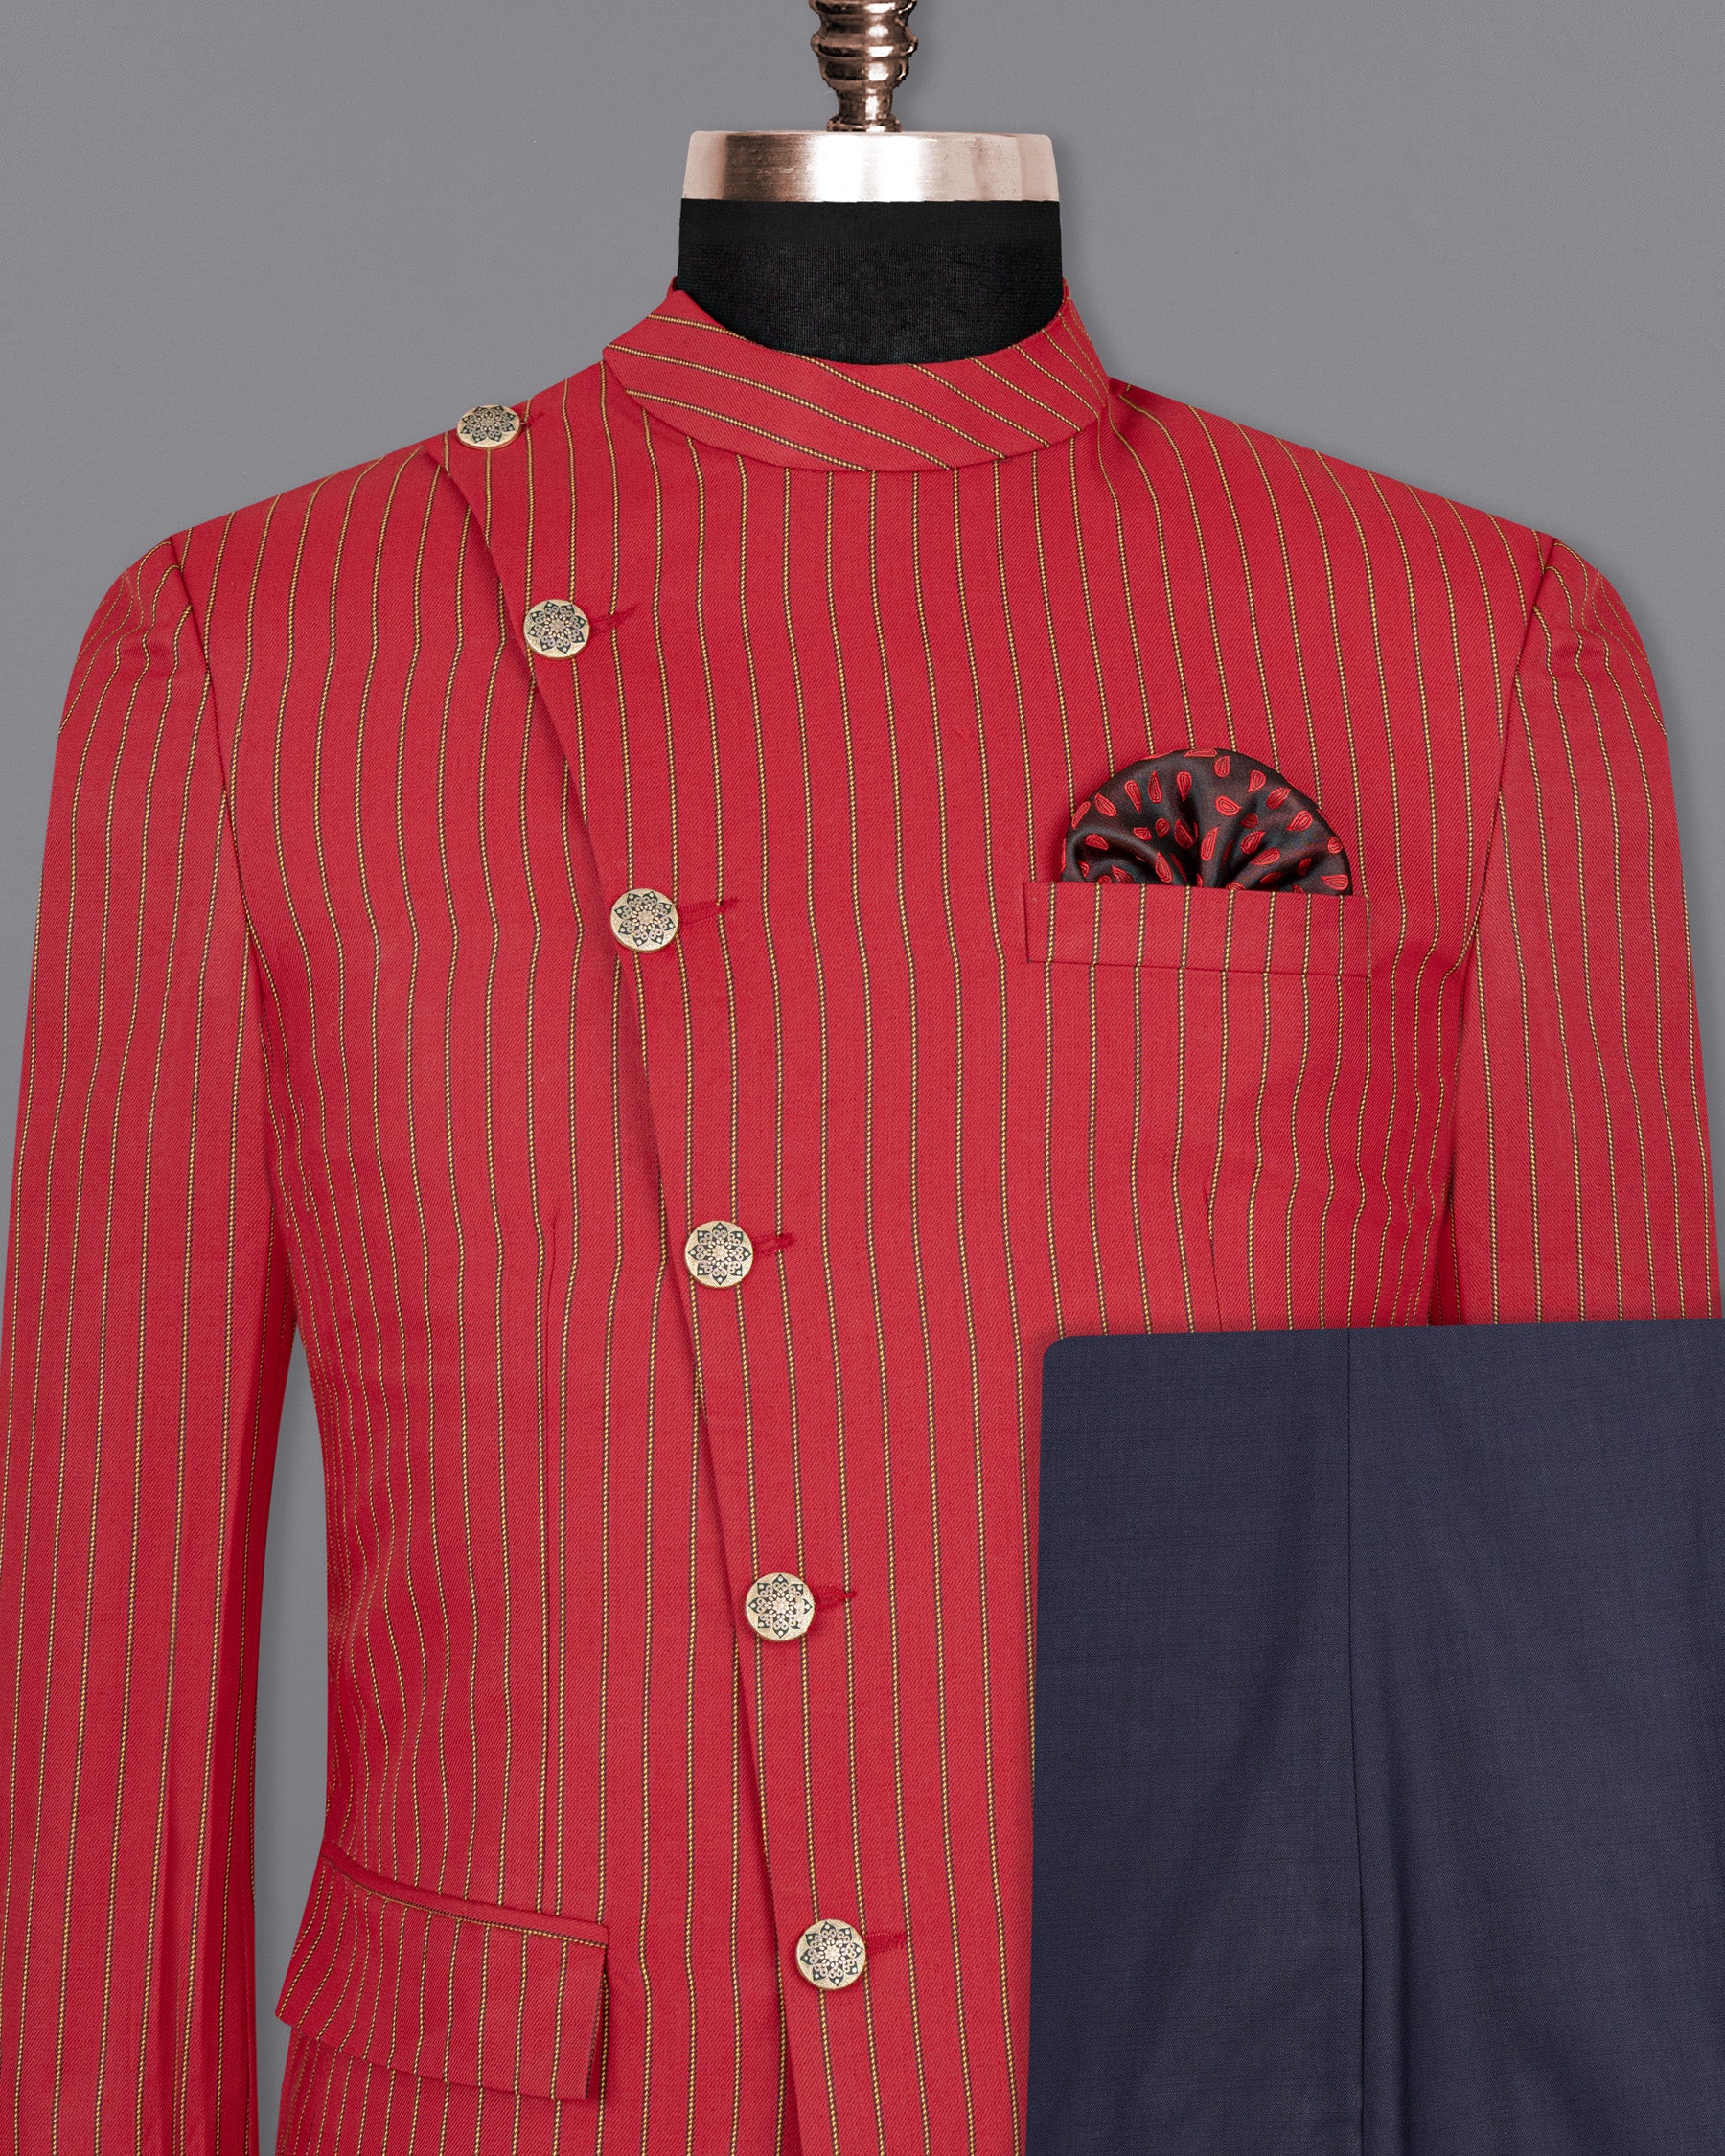 Medium Carmine Red Striped Wool Rich Cross Buttoned Bandhgala Suit ST1505-CBG2-36, ST1505-CBG2-38, ST1505-CBG2-40, ST1505-CBG2-42, ST1505-CBG2-44, ST1505-CBG2-46, ST1505-CBG2-48, ST1505-CBG2-50, ST1505-CBG2-52, ST1505-CBG2-54, ST1505-CBG2-56, ST1505-CBG2-58, ST1505-CBG2-60